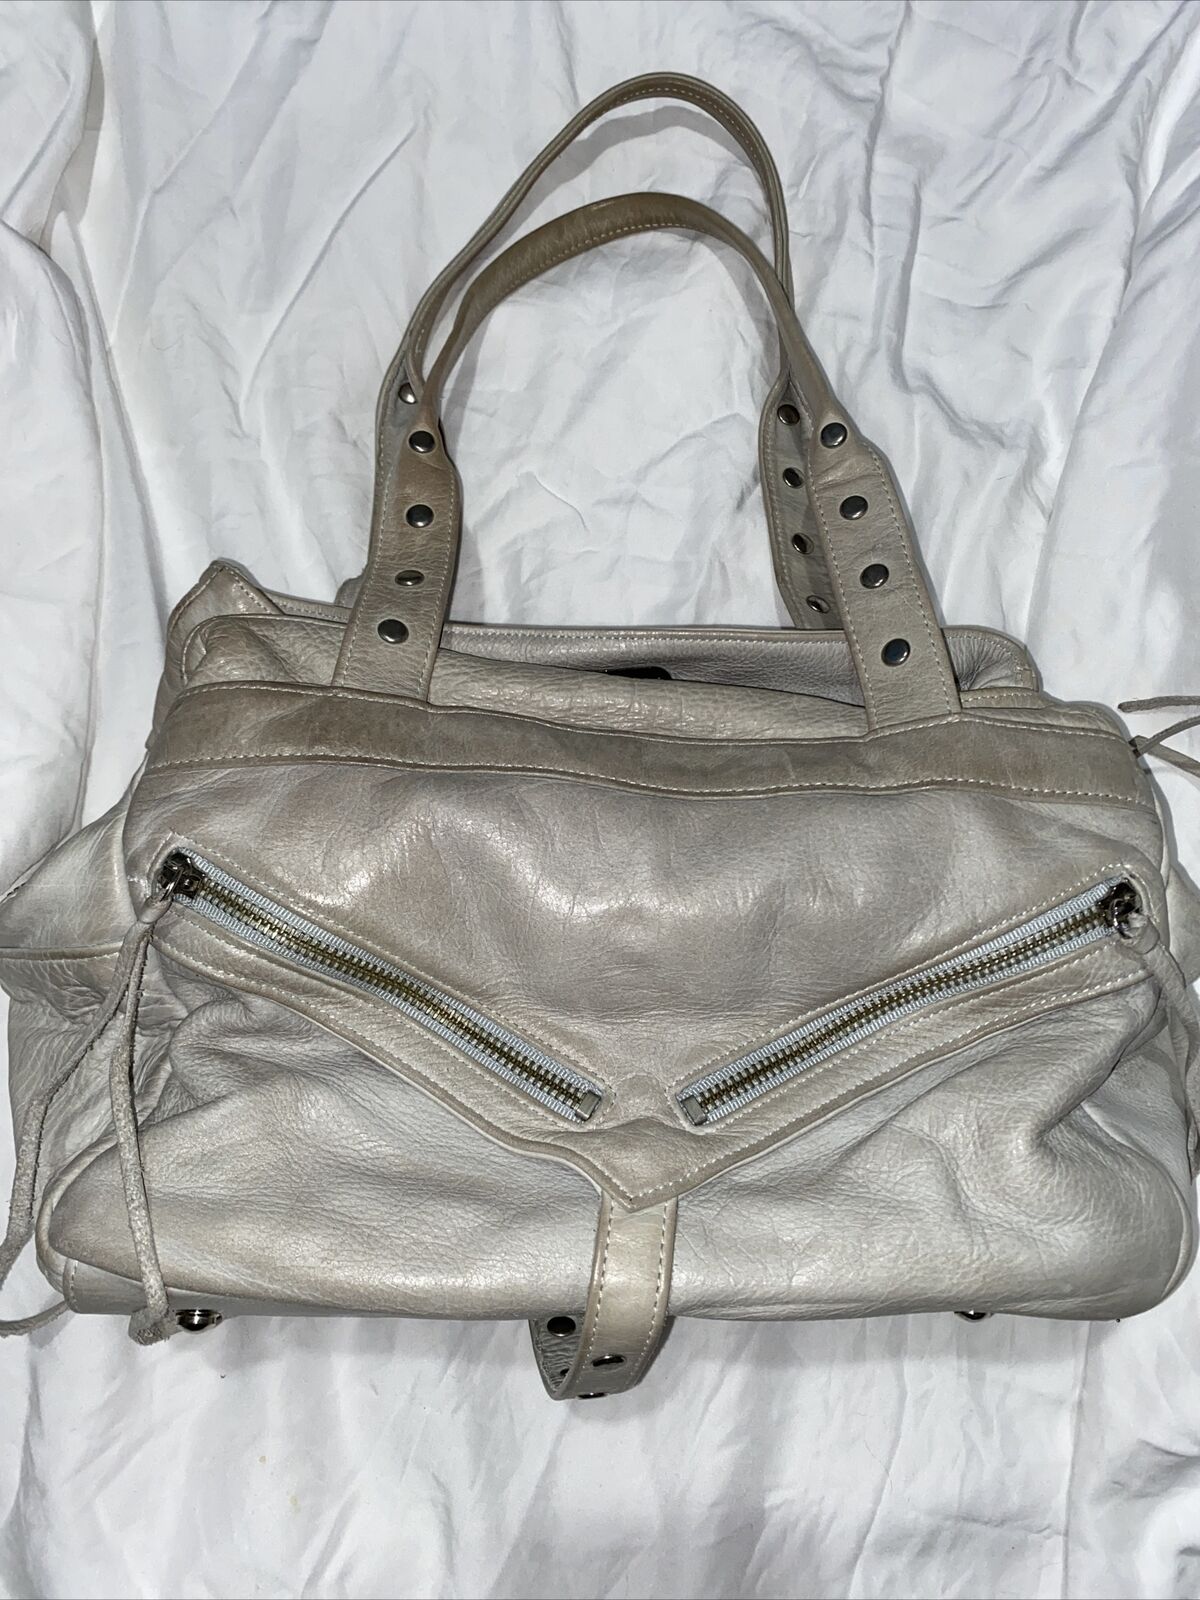 Gray Botkier Leather Satchel Handbag with Hardware